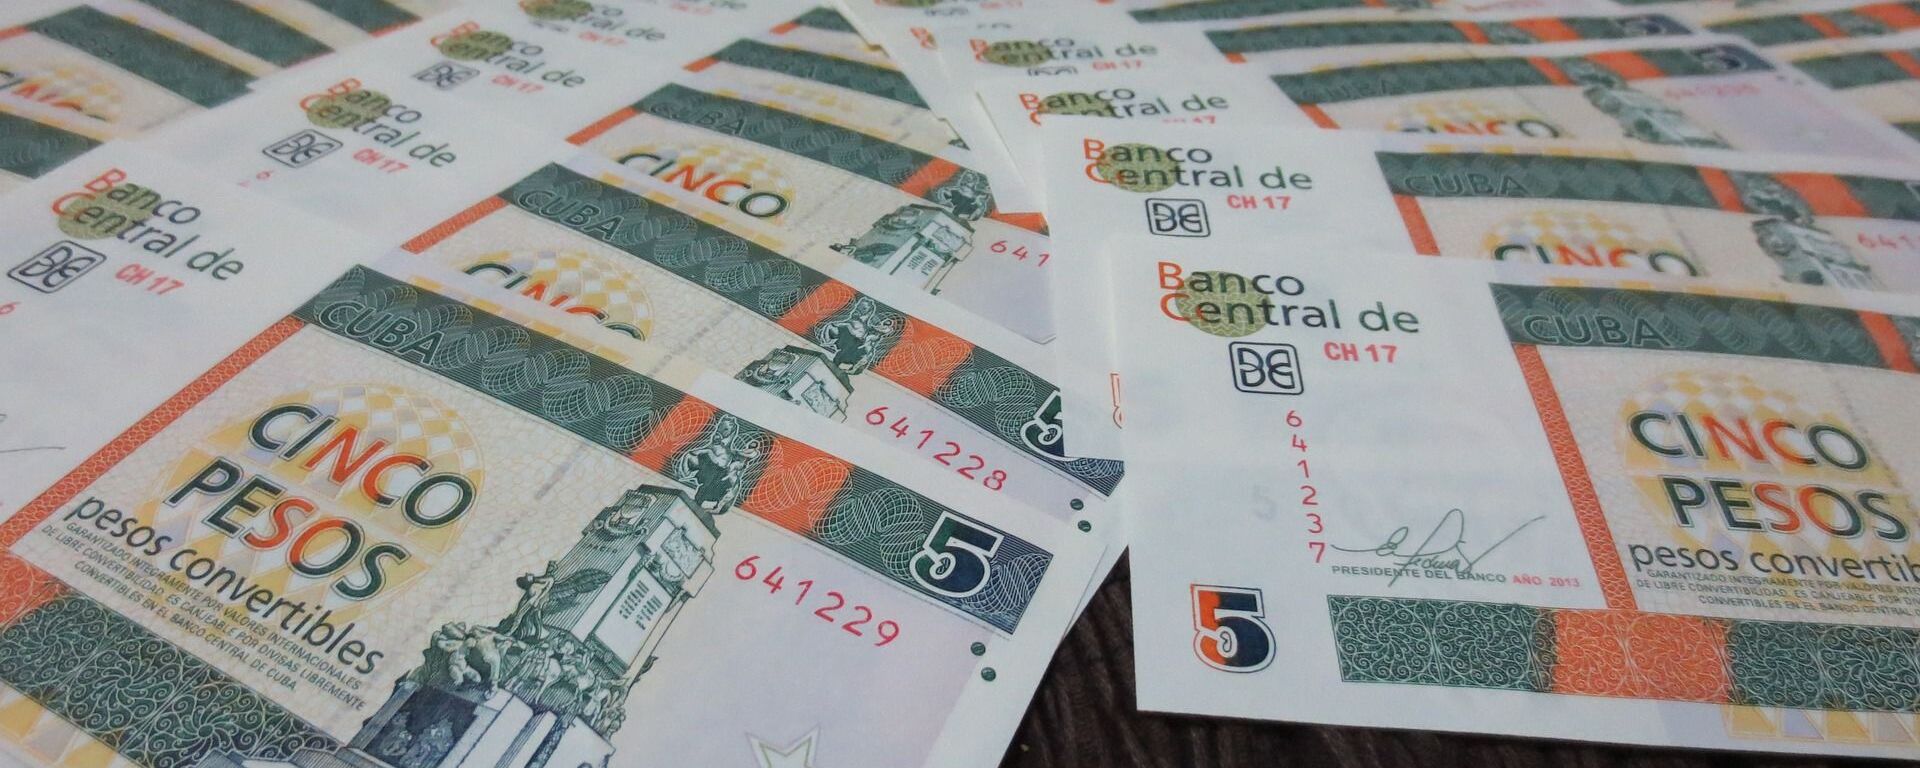 Billetes de pesos cubanos convertibles - imagen referencial - Sputnik Mundo, 1920, 15.03.2021